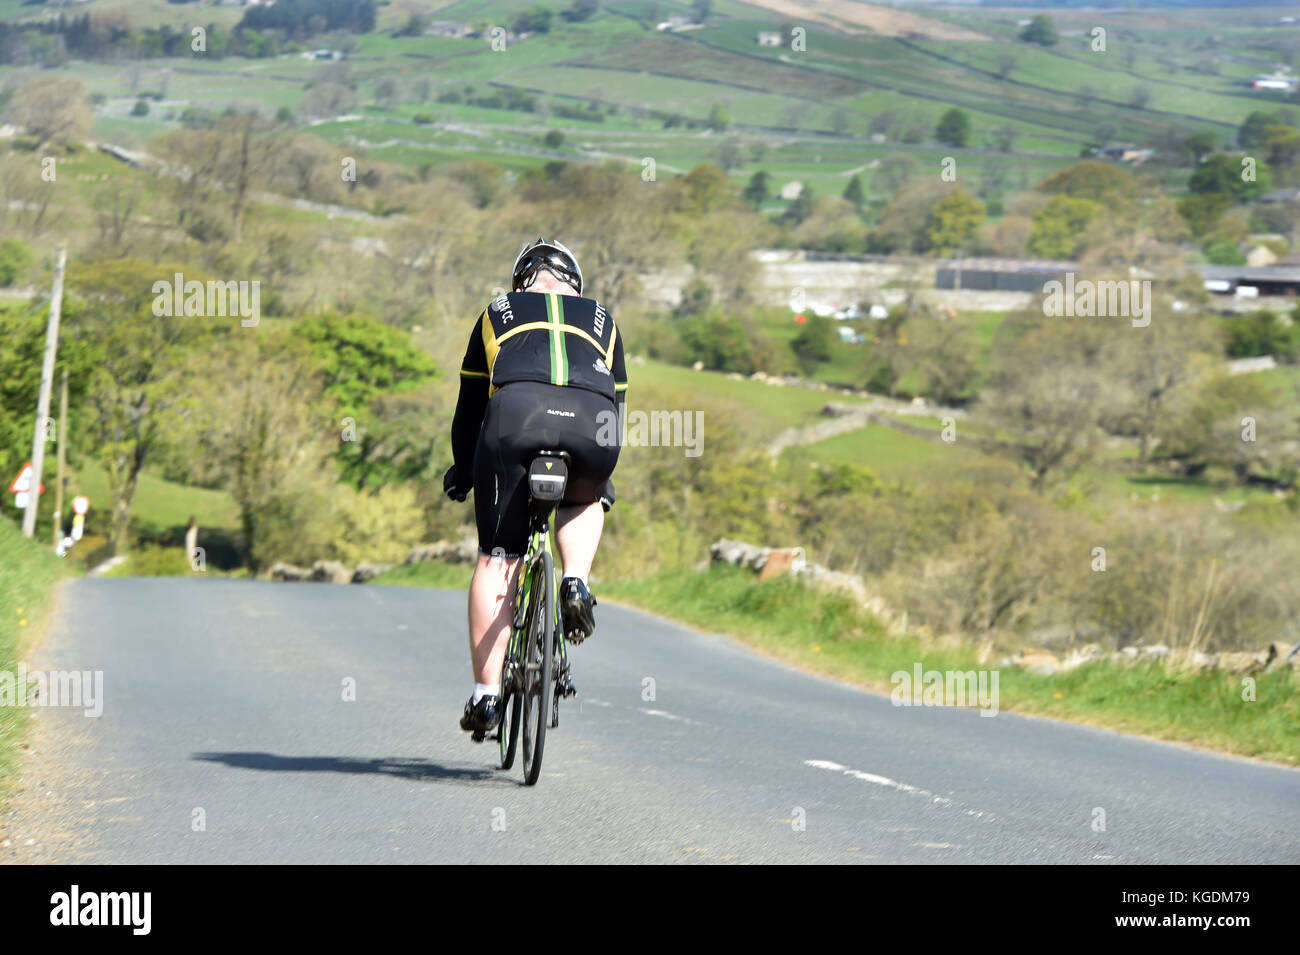 Vista posterior del ciclista monta su bicicleta burnsall yorkshire uk Foto de stock